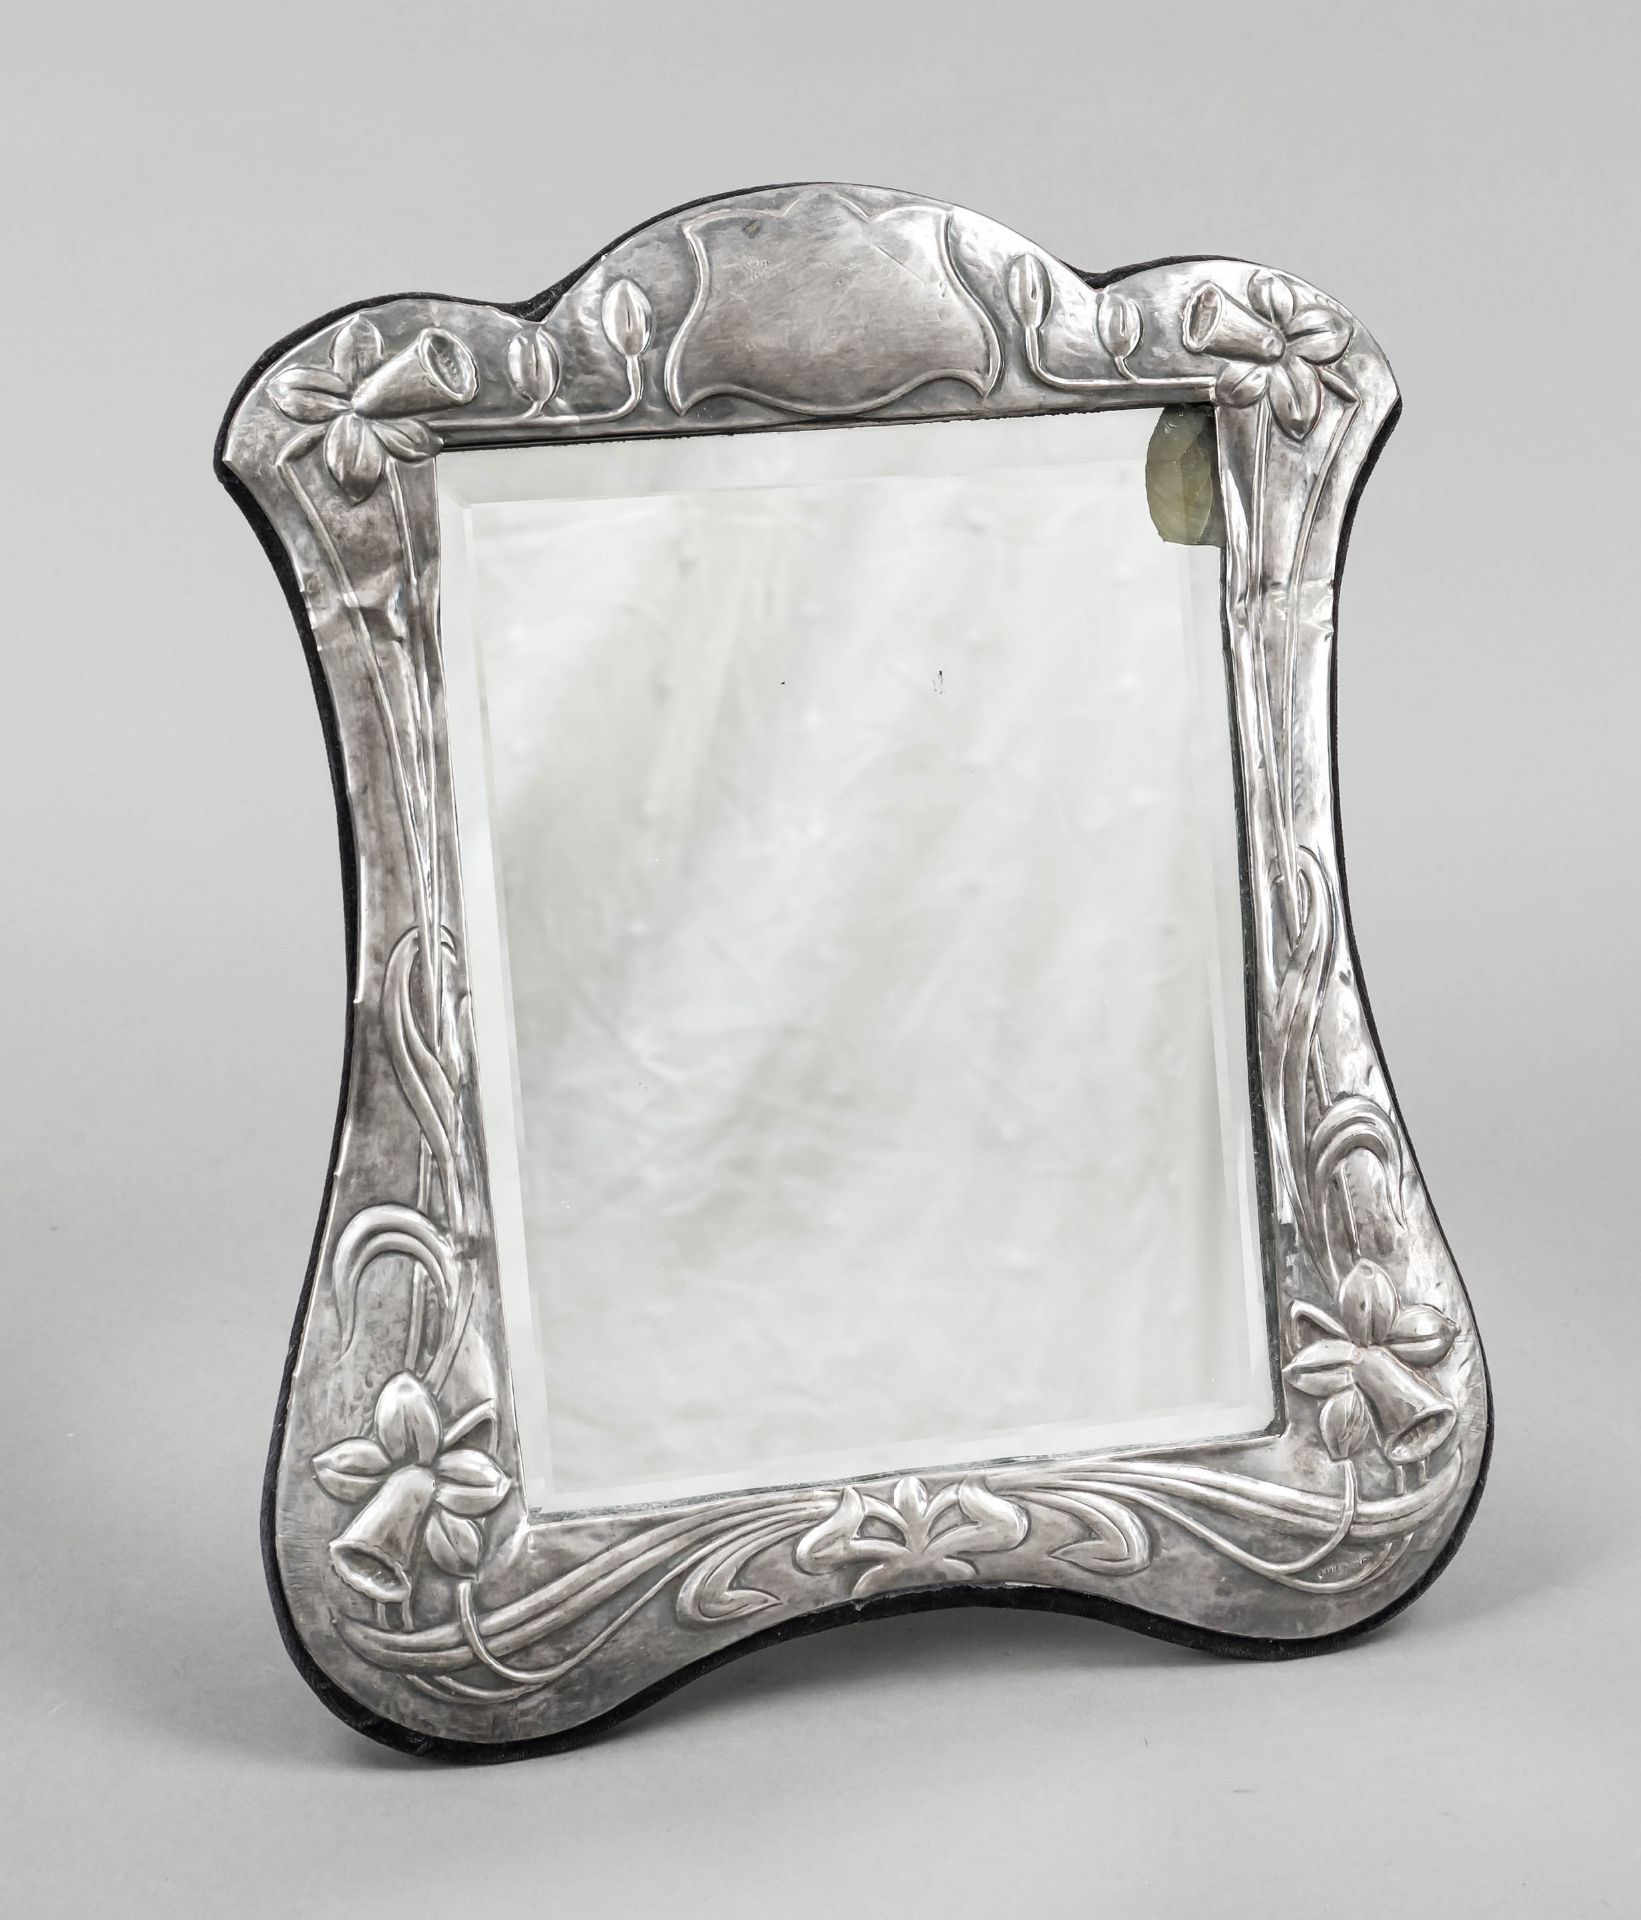 Table mirror, England, 1989, maker's mark Keyford Frames Ltd, London, sterling silver 925/000,